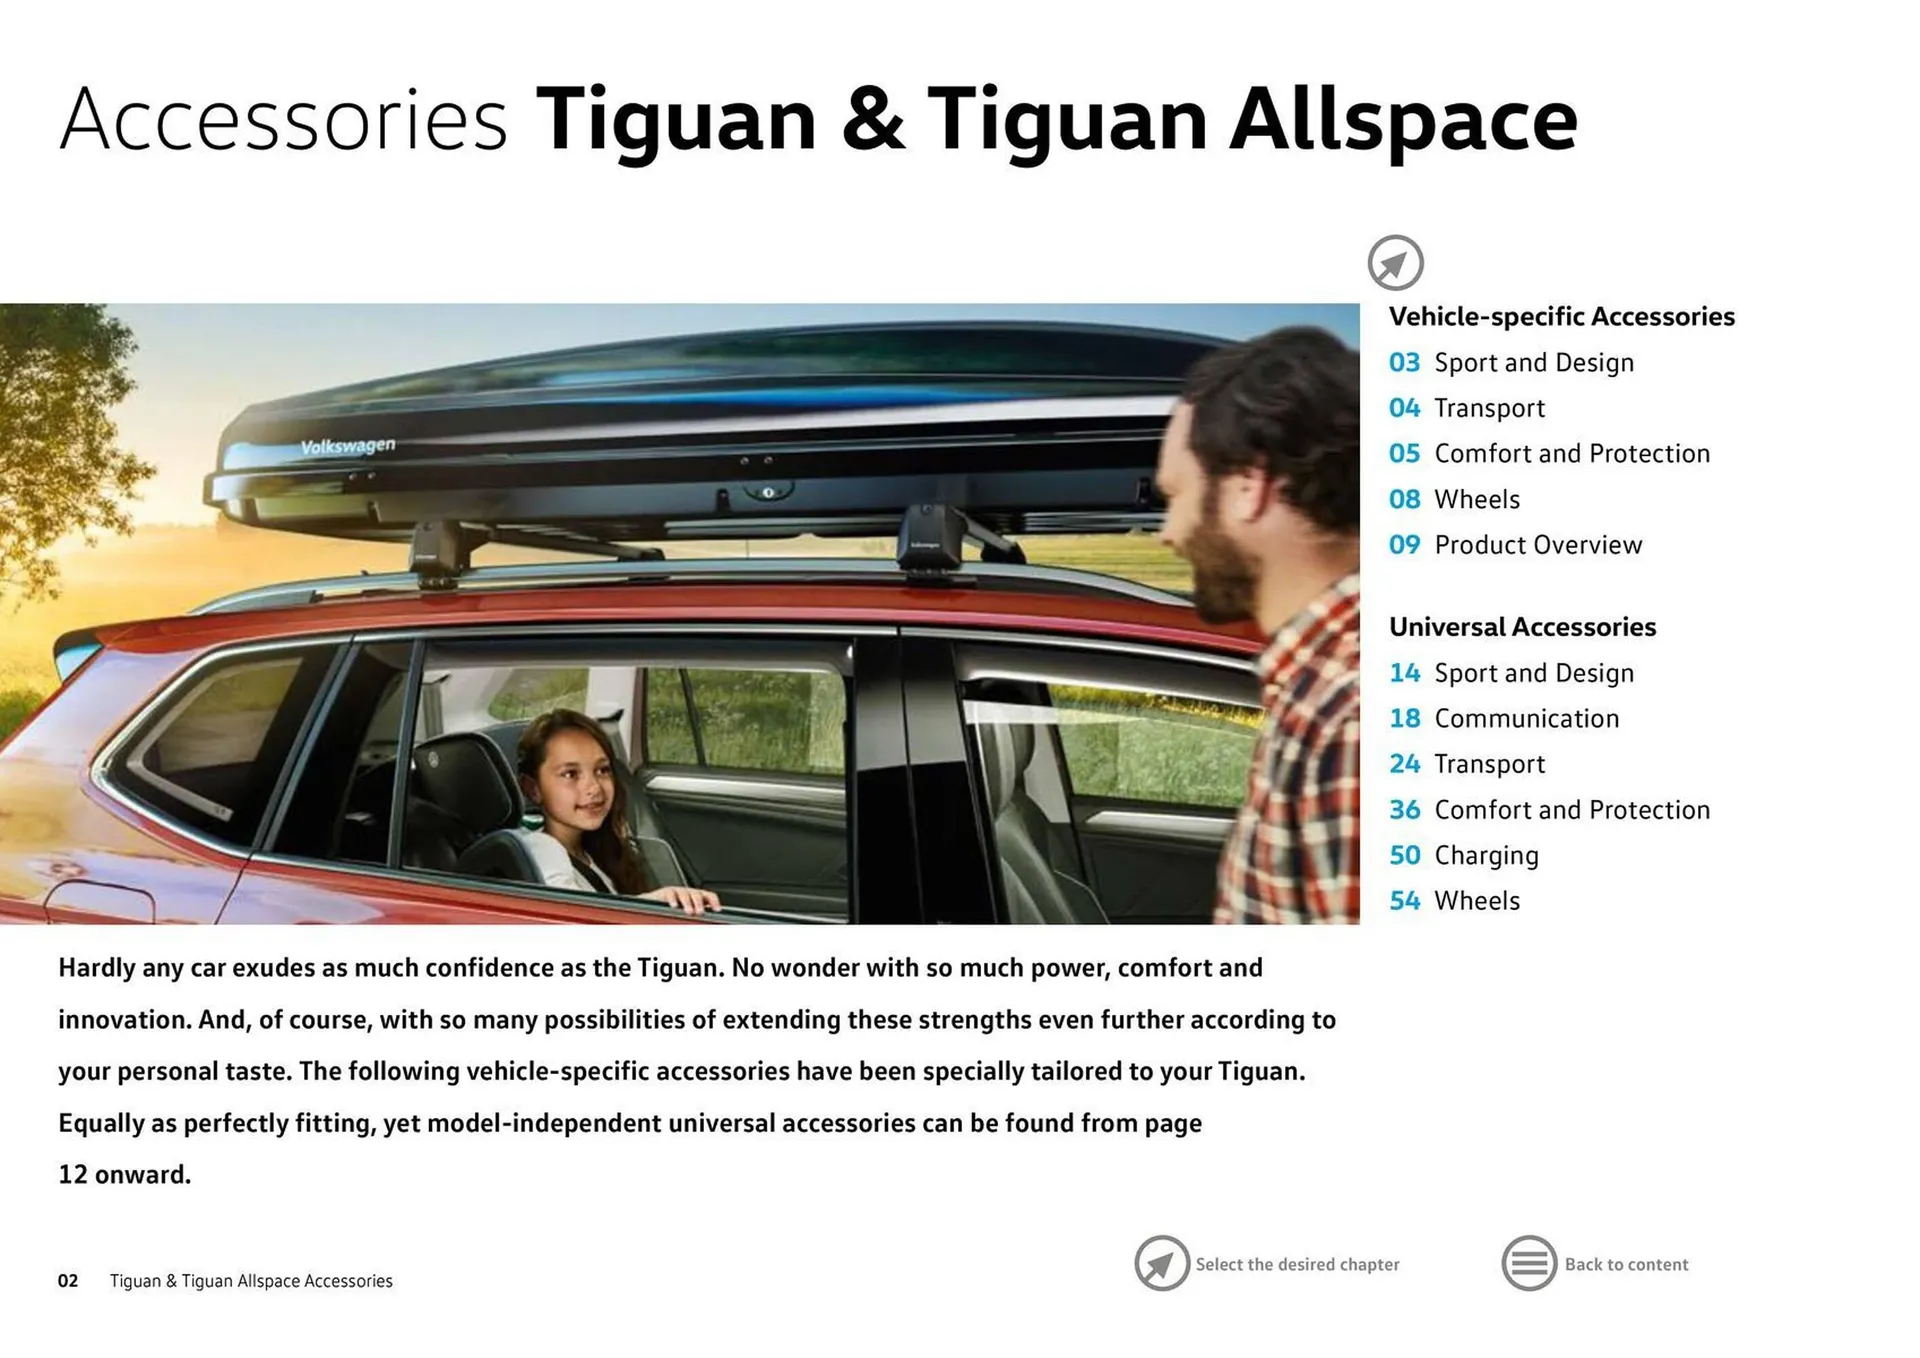 Volkswagen Accessories For The Tiguan & Tiguan Allspace catalog - 2